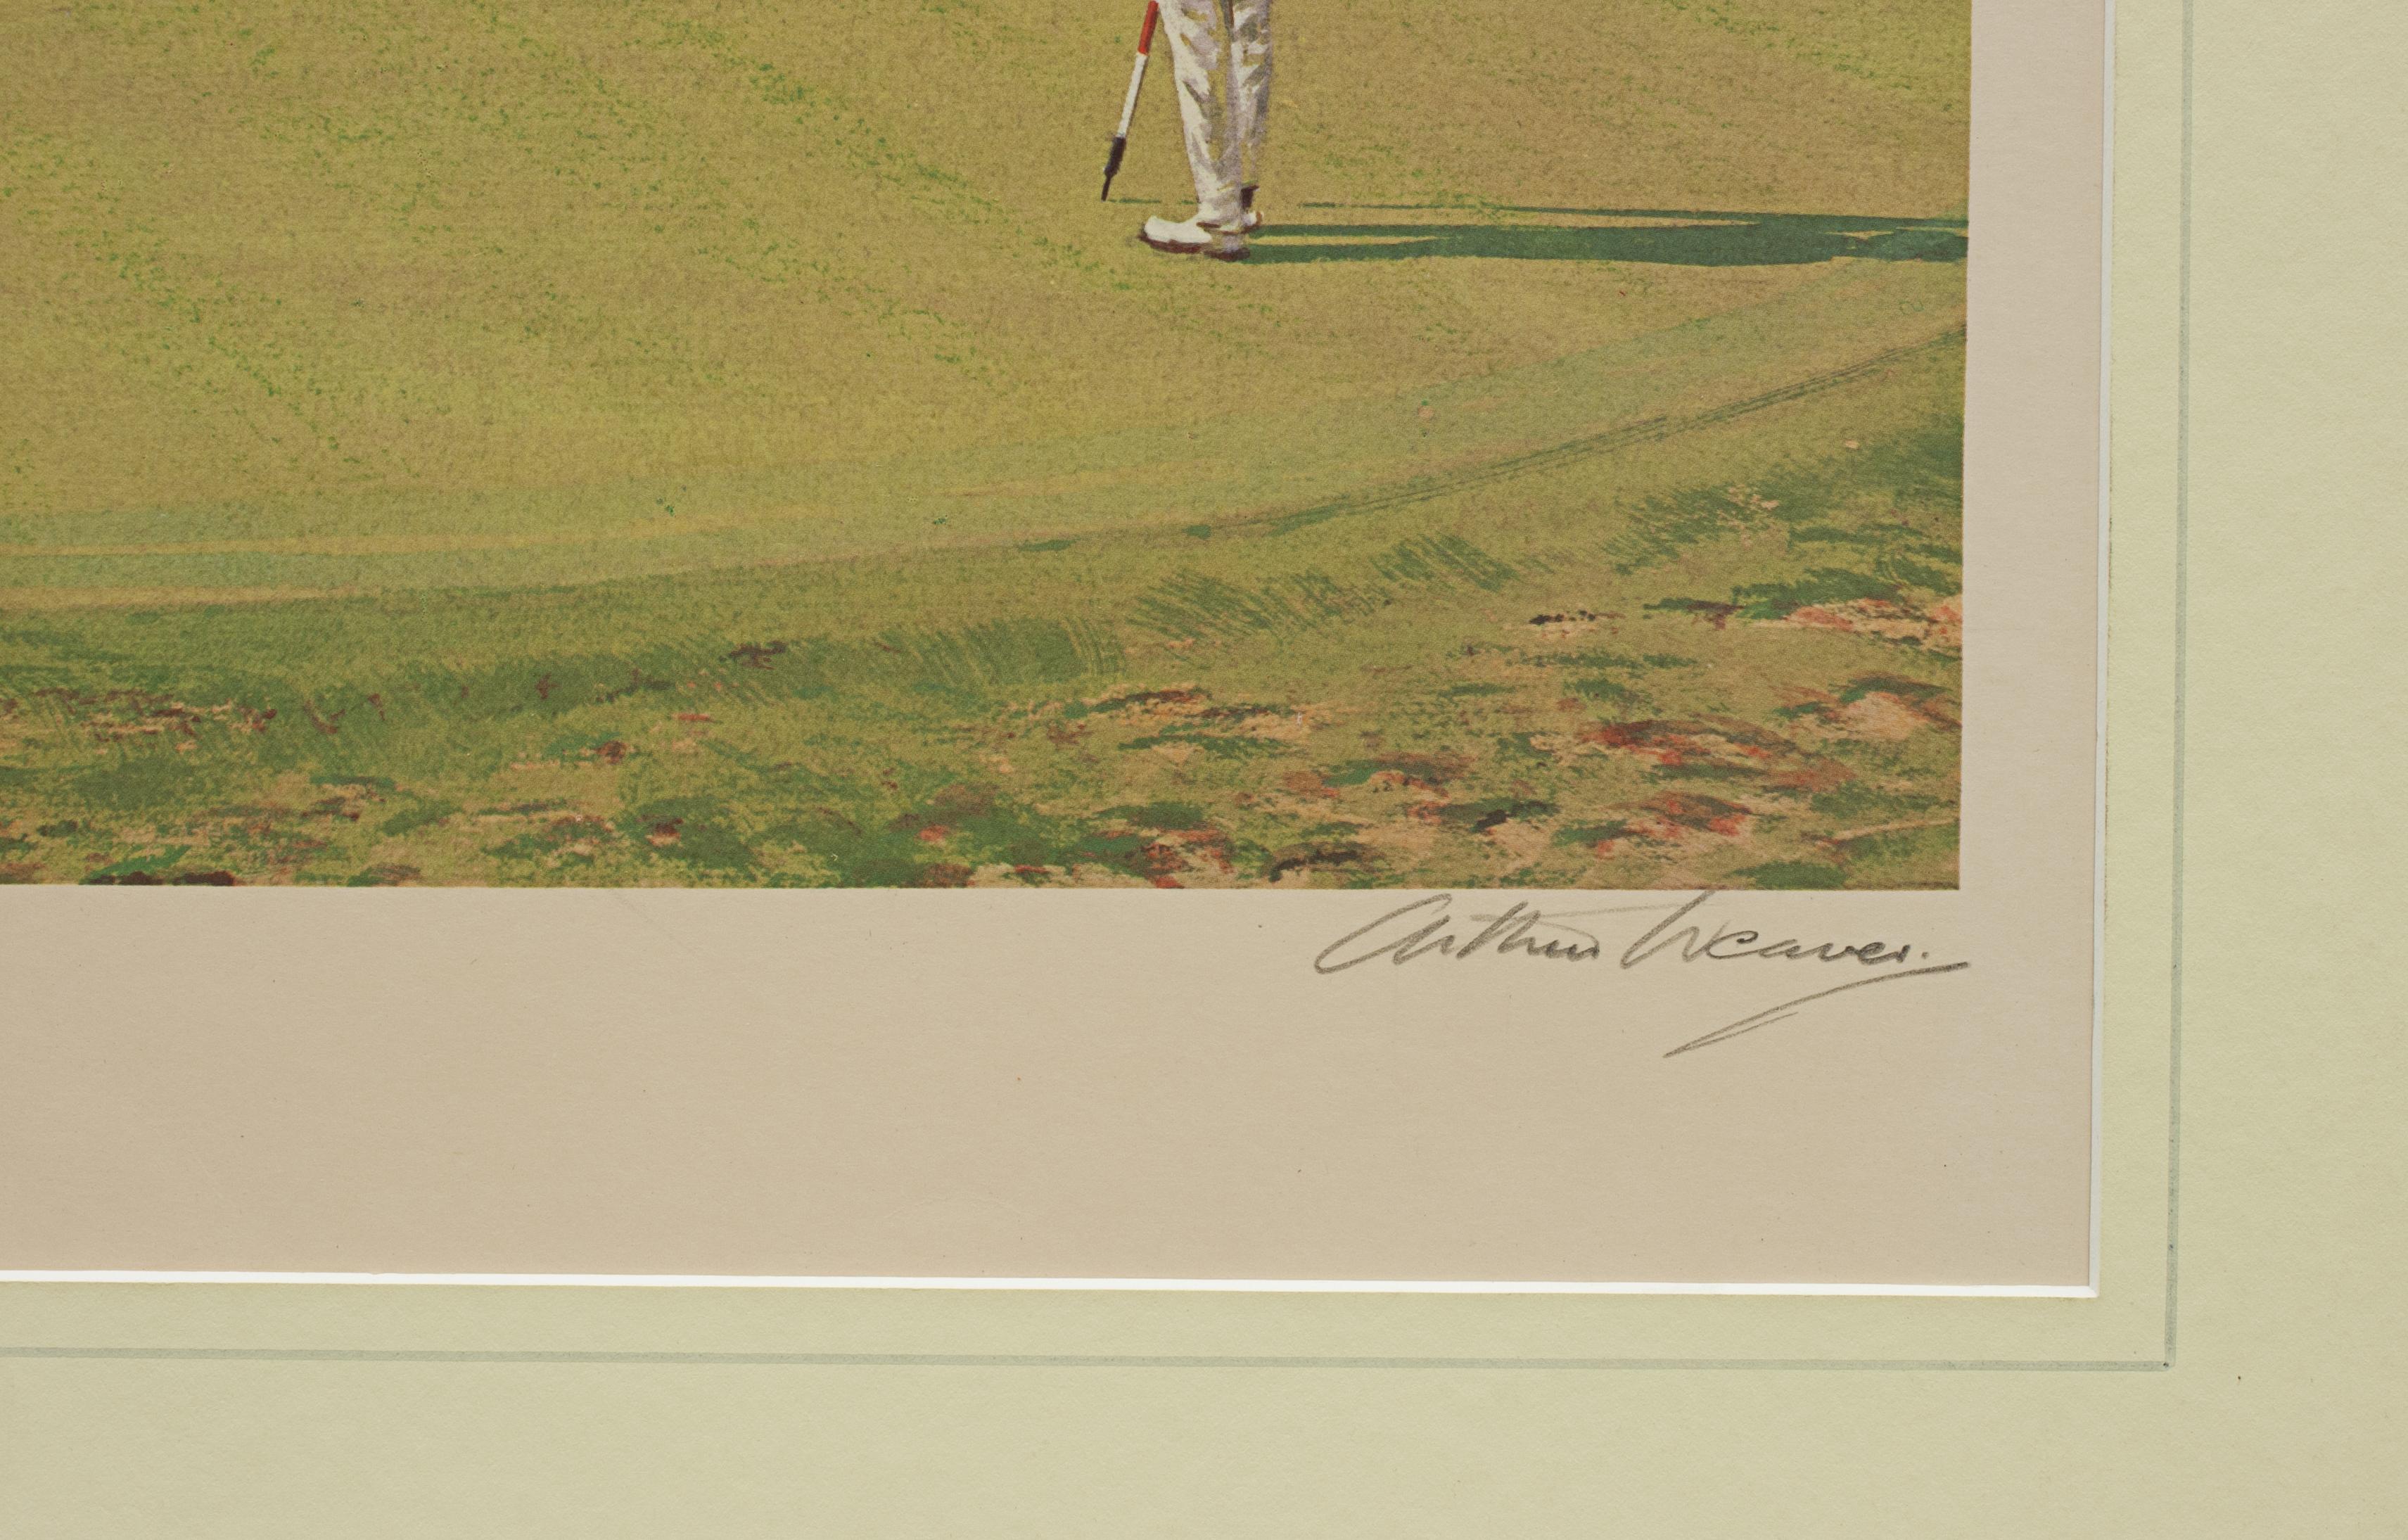 Sporting Art 1968 US Masters Golf Print by Arthur Weaver